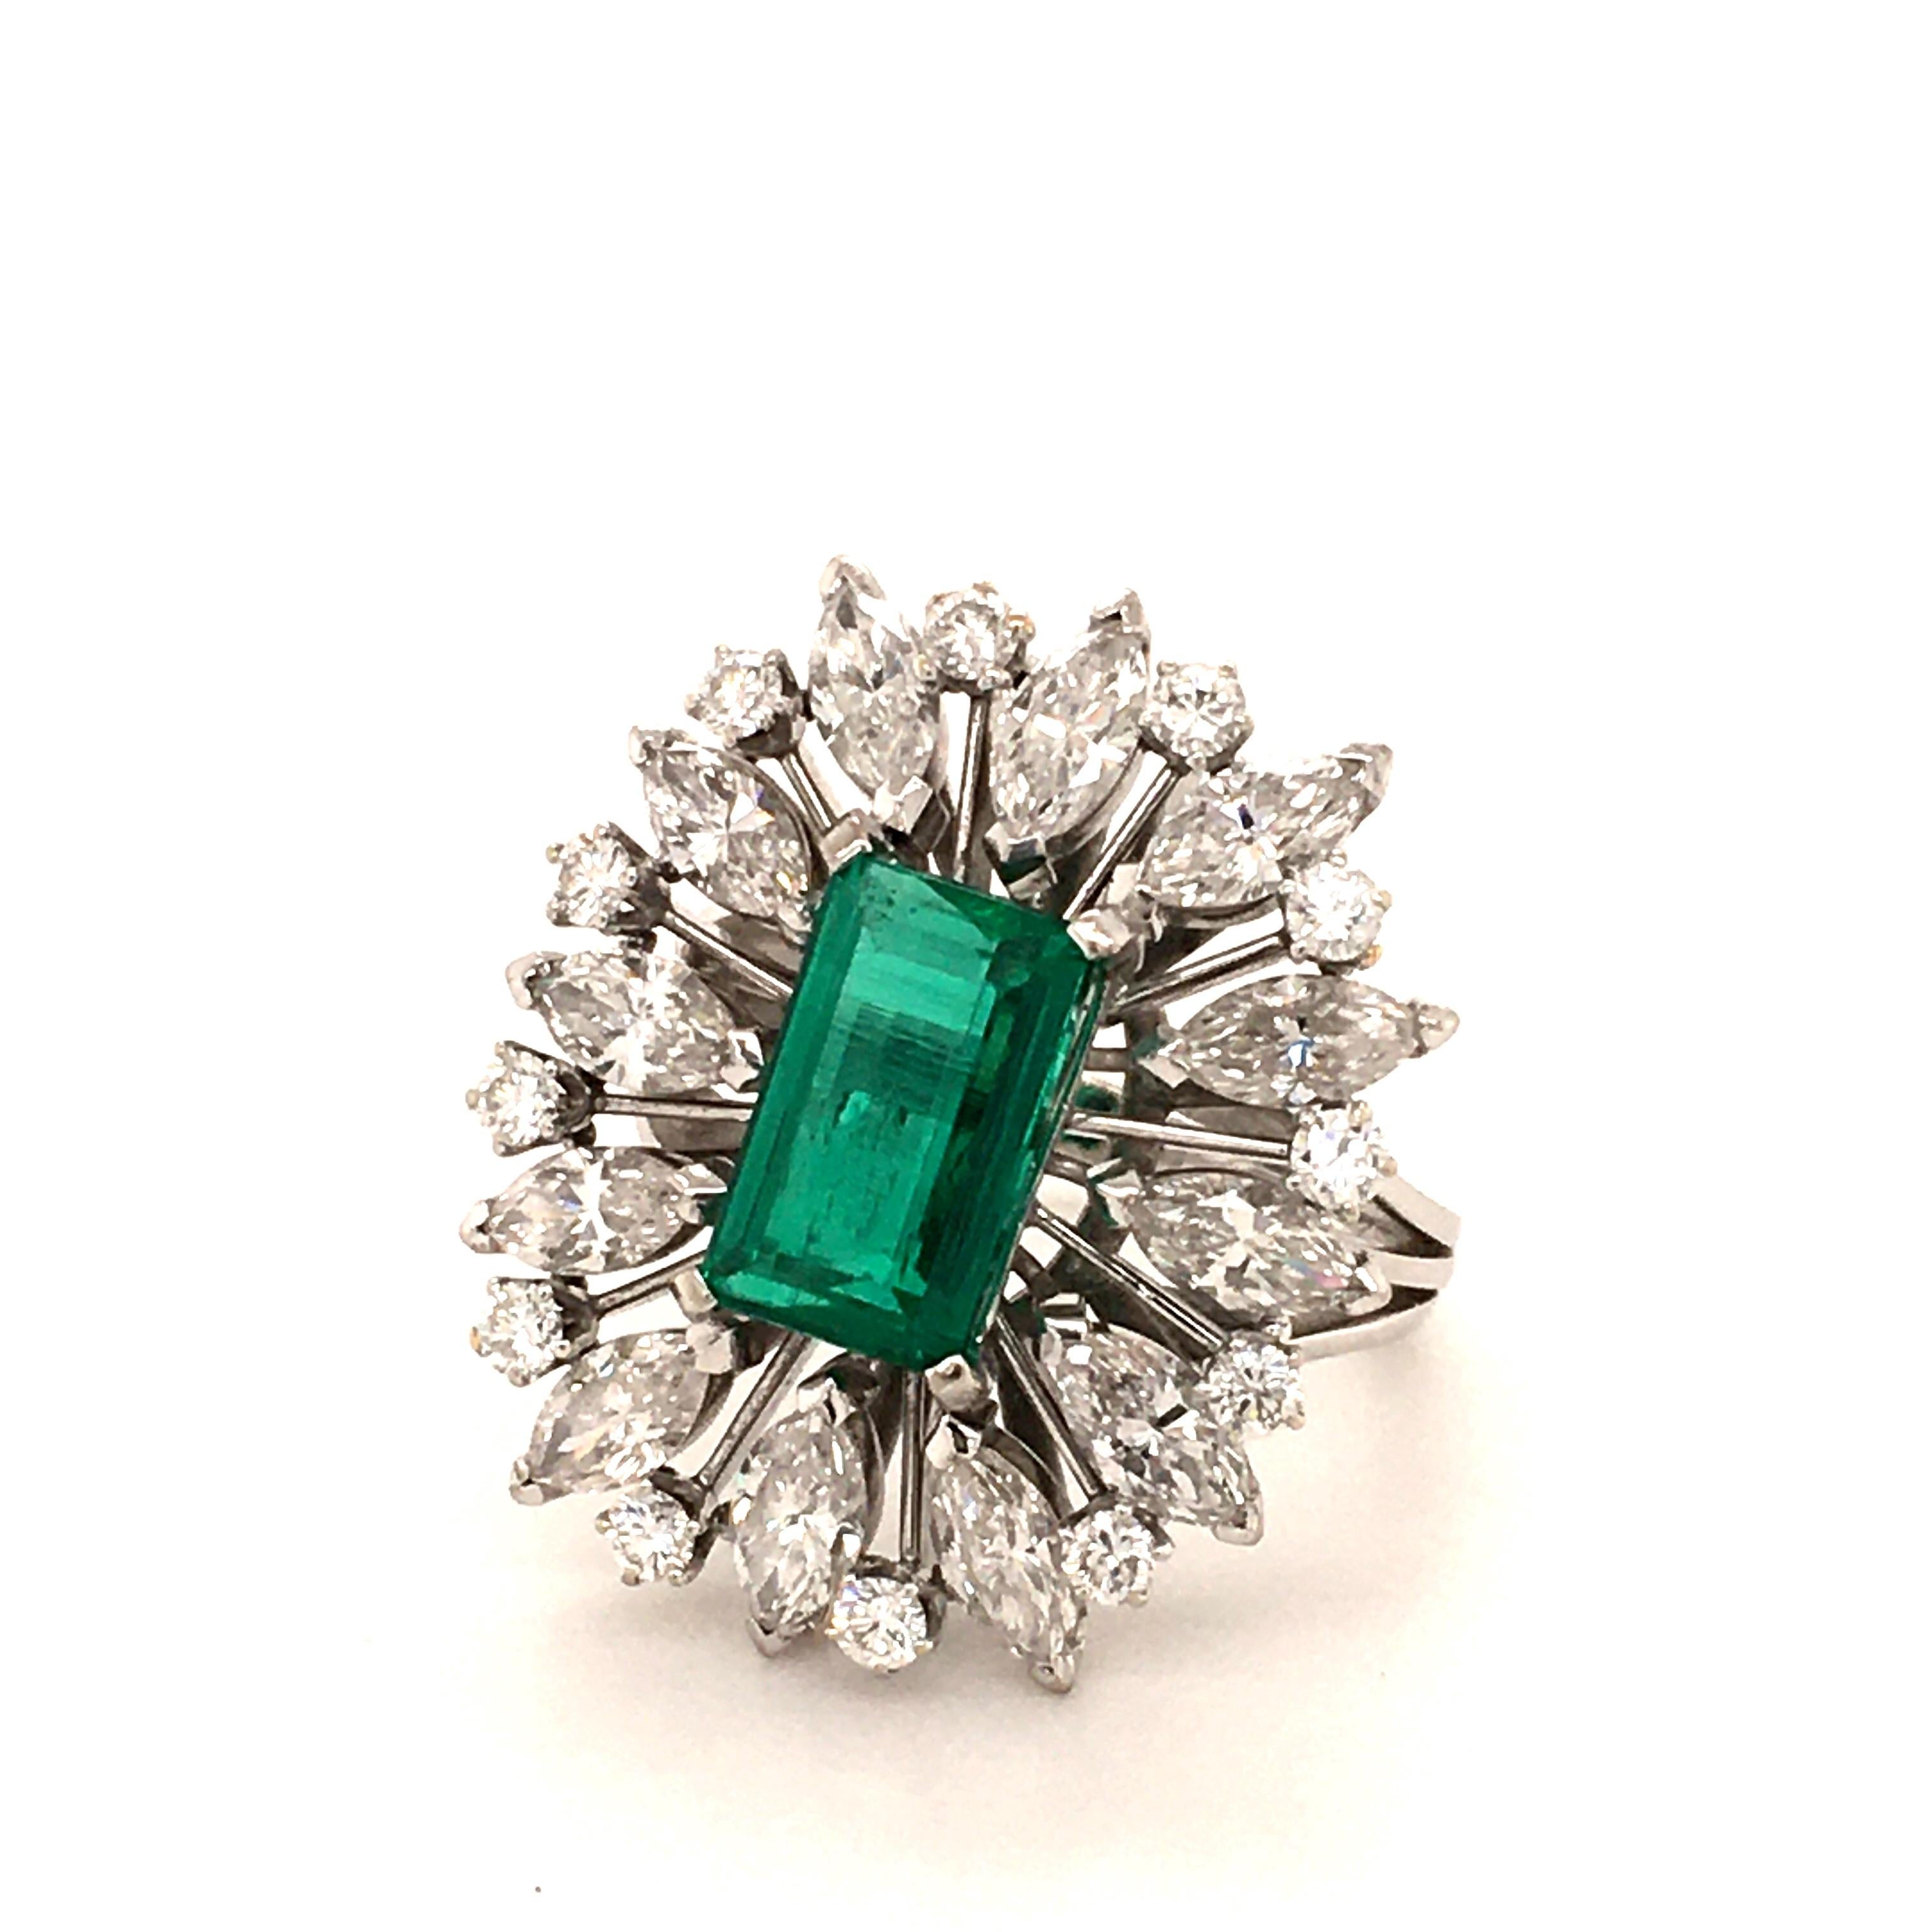 Modern 2.25 Carat Colombian Emerald and Diamond Ring in 18 Karat White Gold